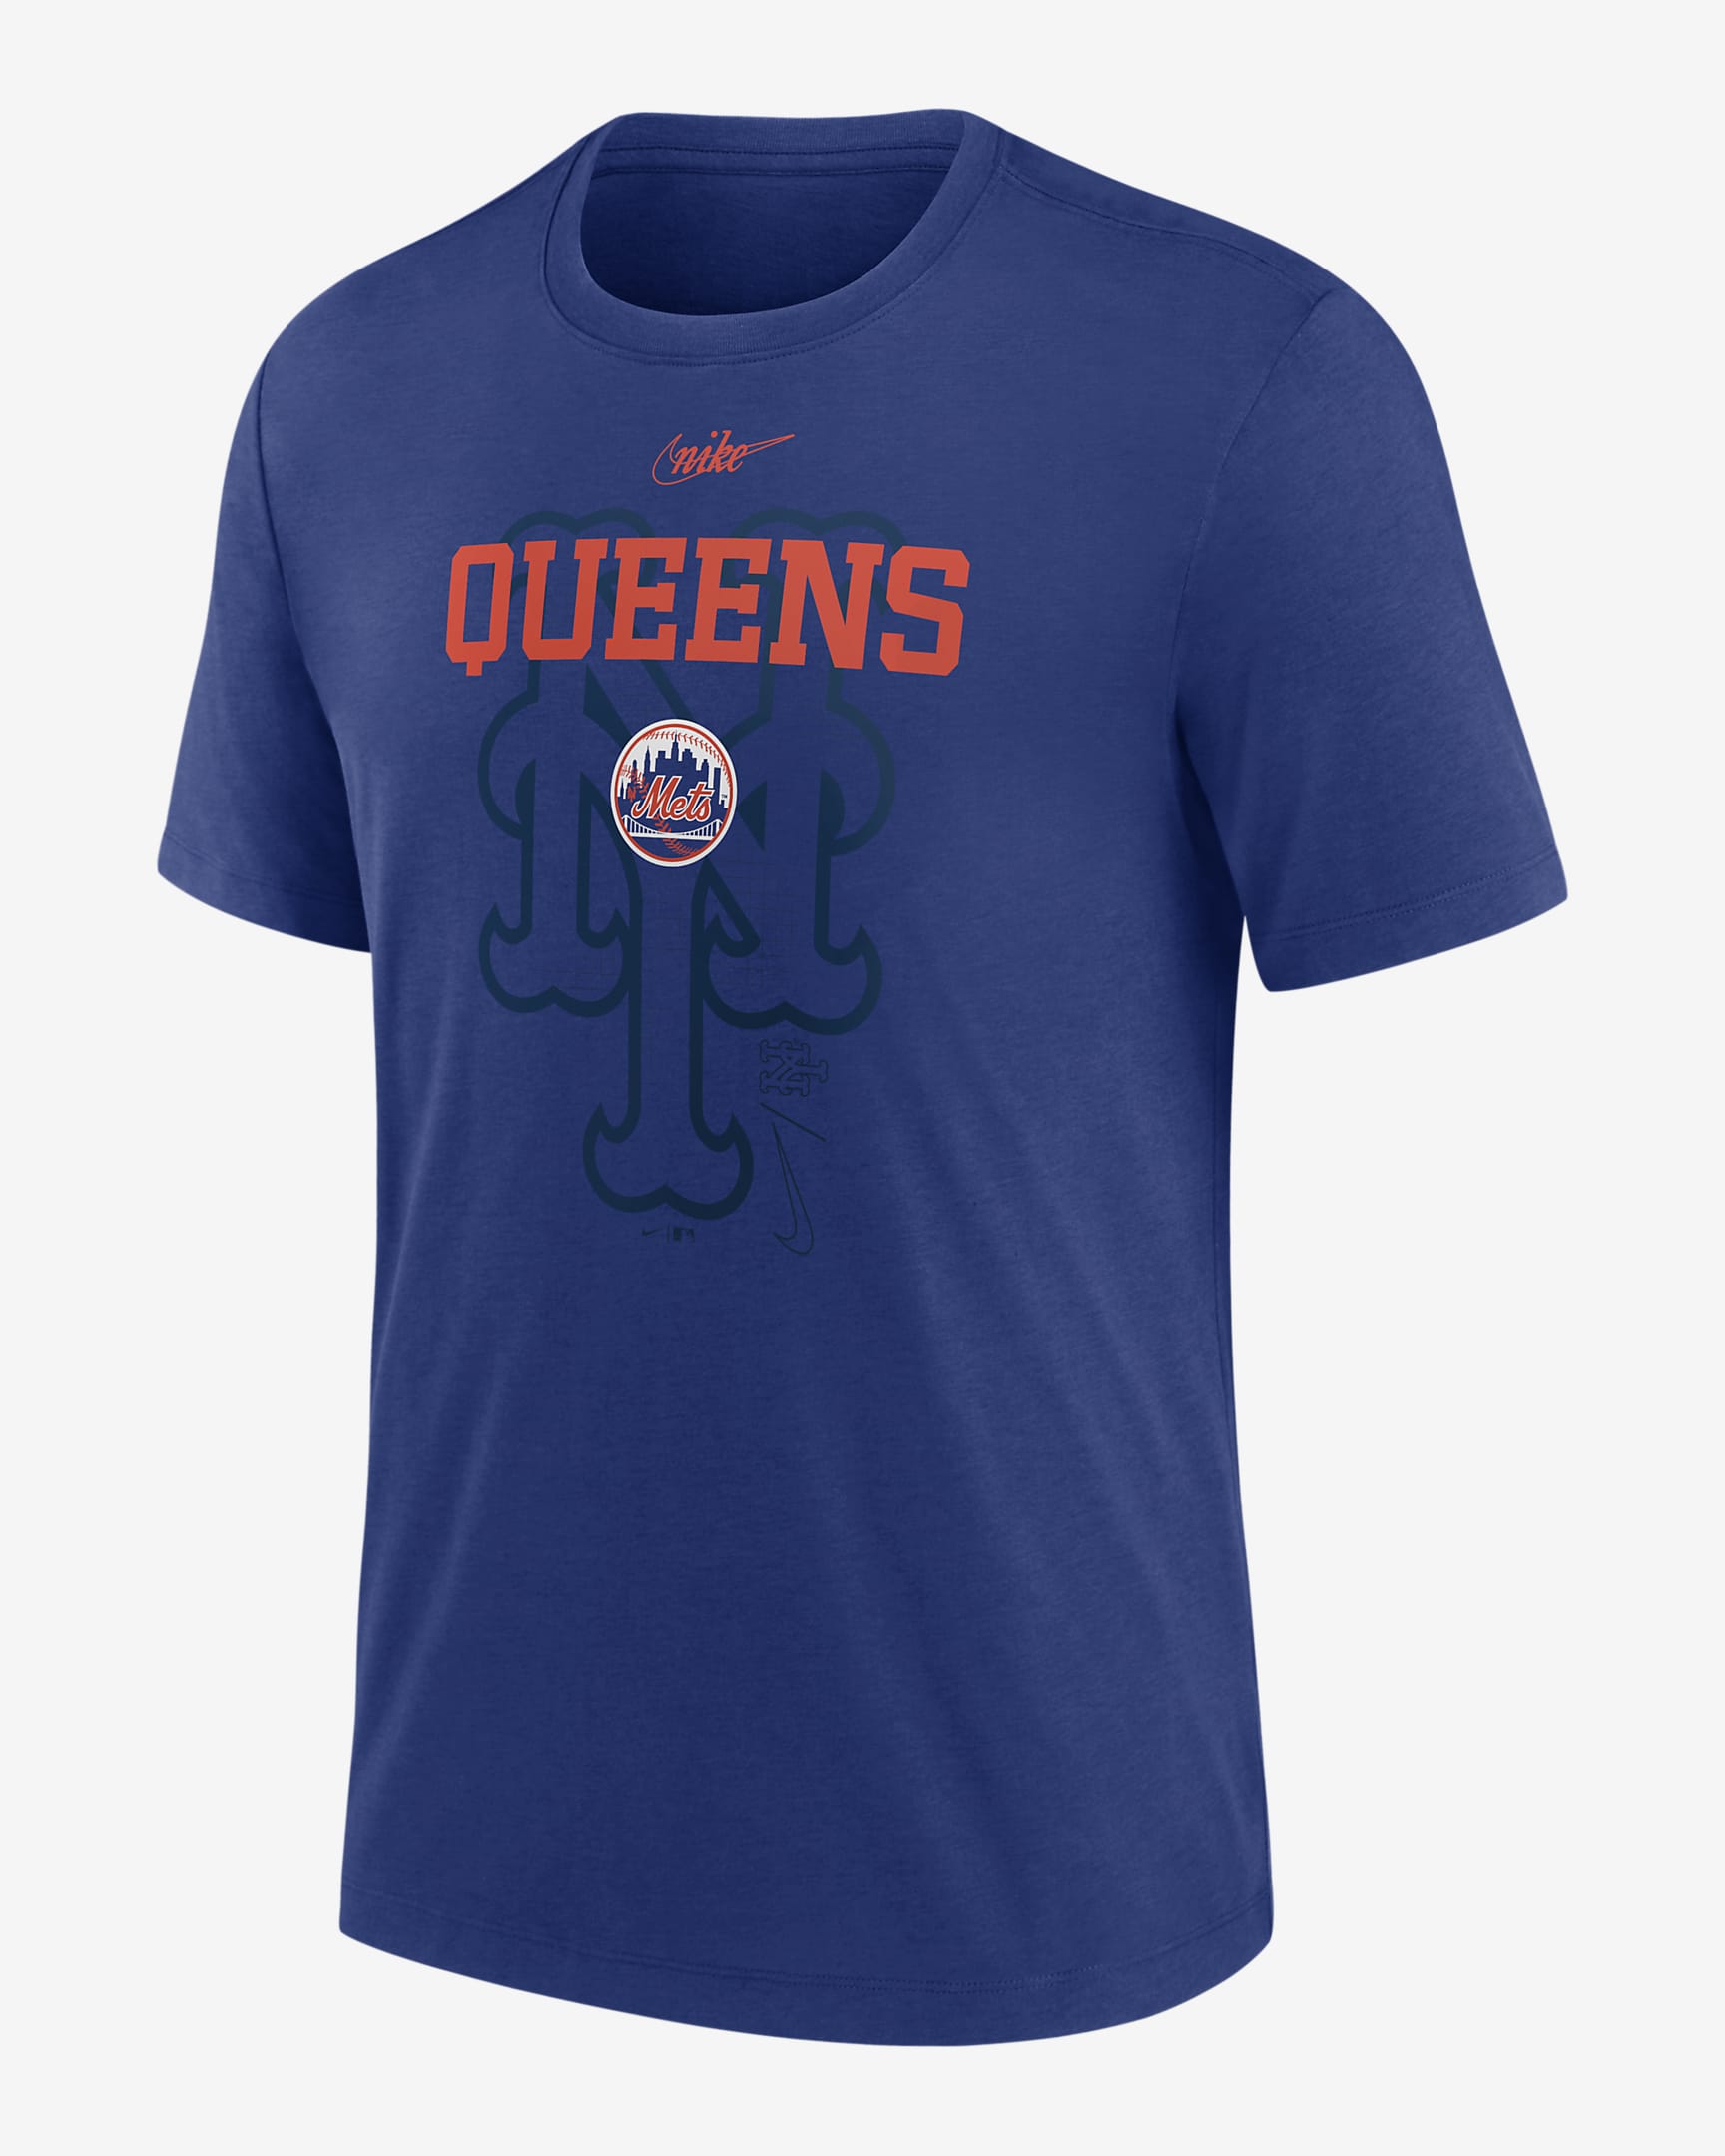 Nike Rewind Retro (MLB New York Mets) Men's T-Shirt. Nike.com